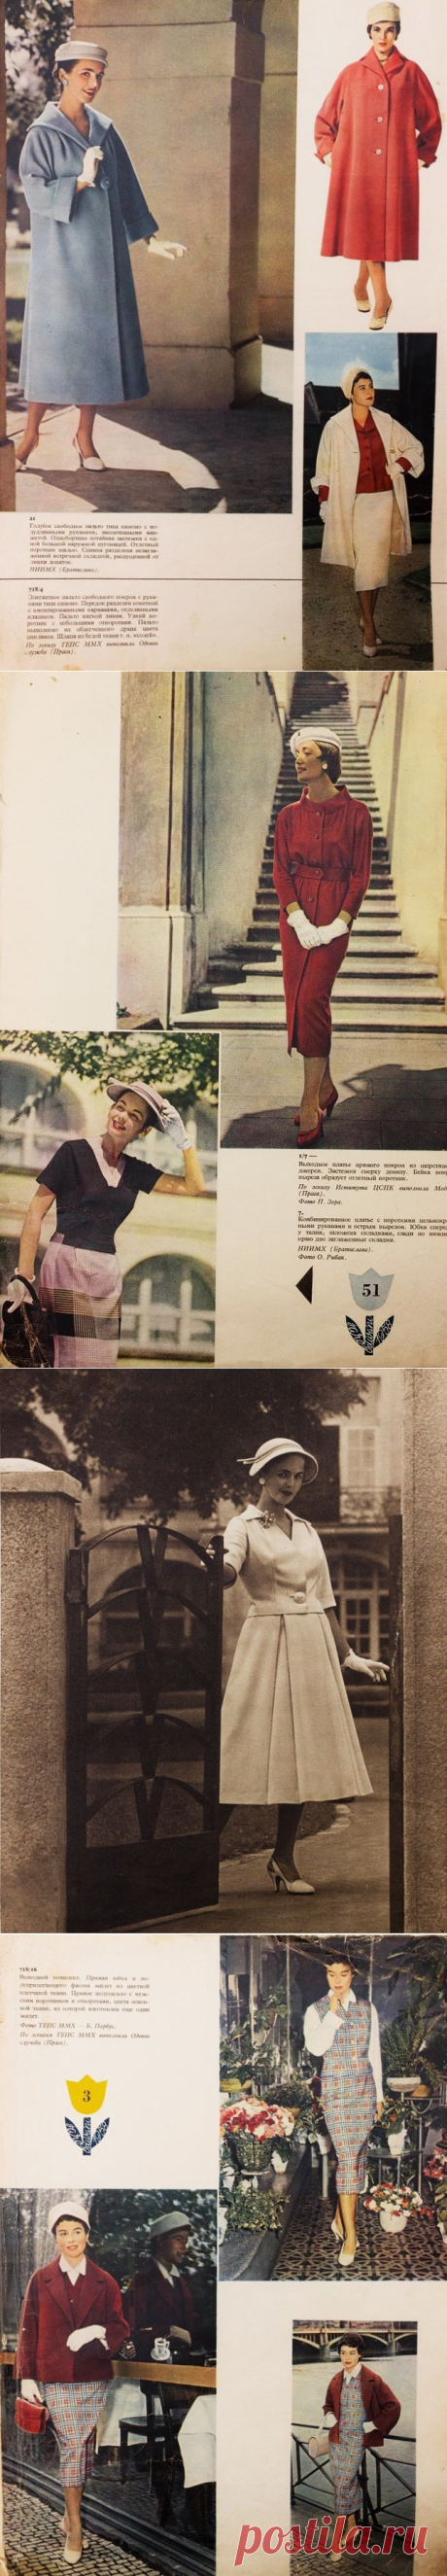 Журнал мод «Odivani», весна 1958 года: публикации и мастер-классы – Ярмарка Мастеров